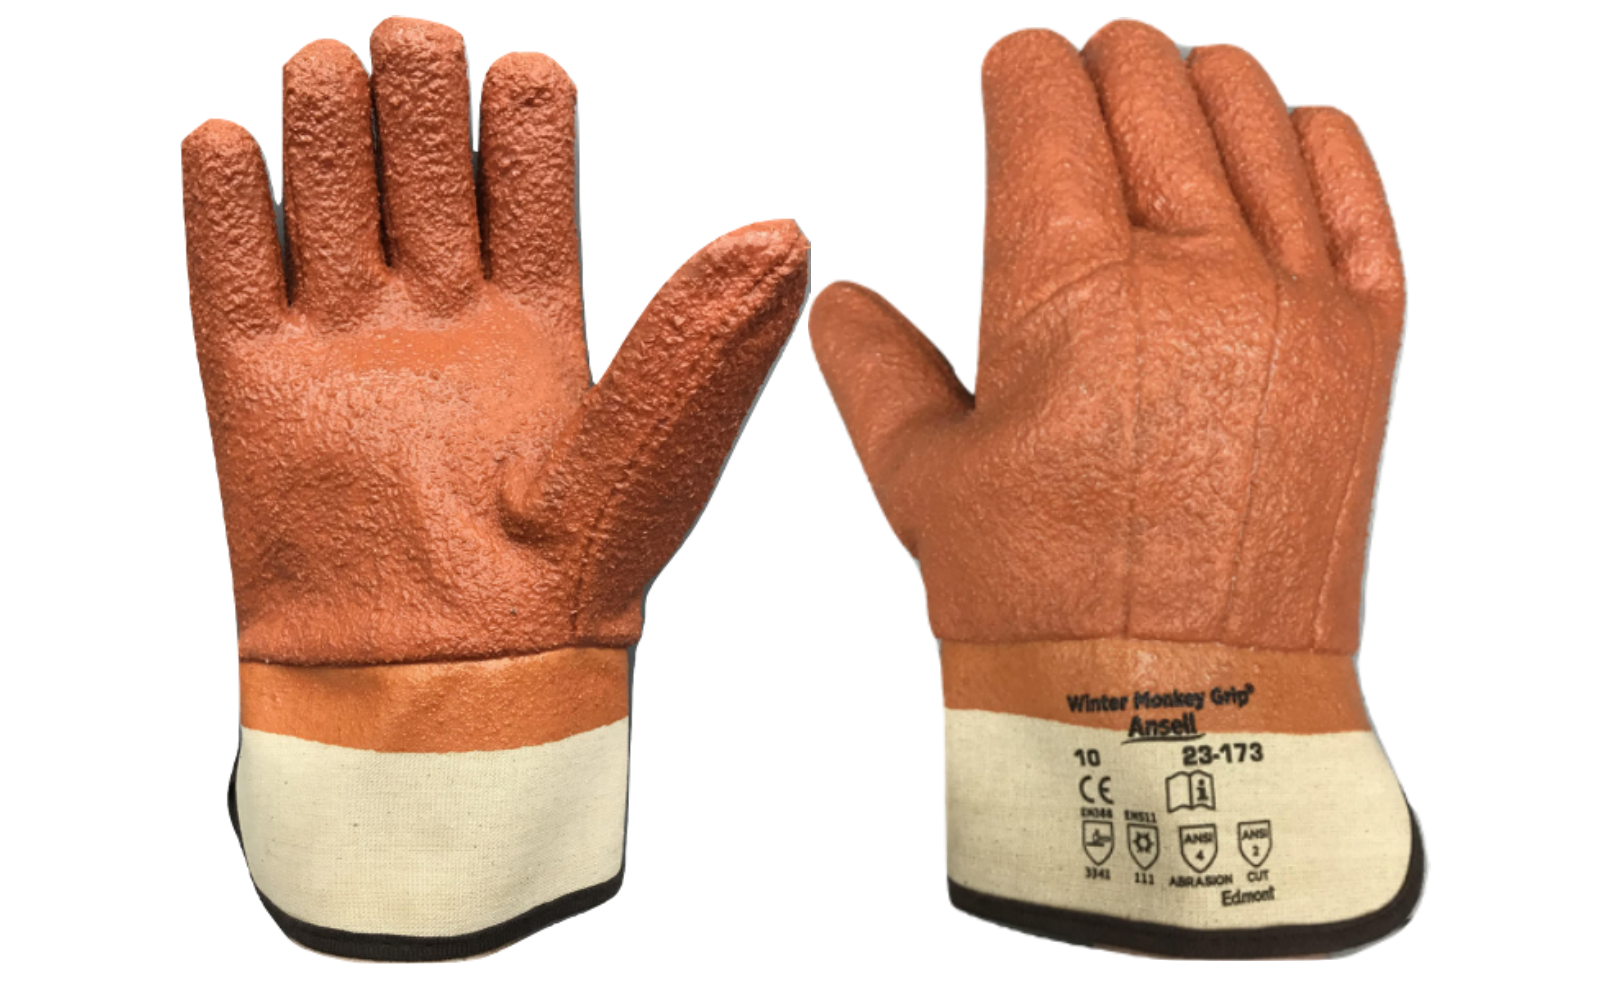 Ansell Winter Monkey Grip 23-173 Raised Finish PVC Coated Glove